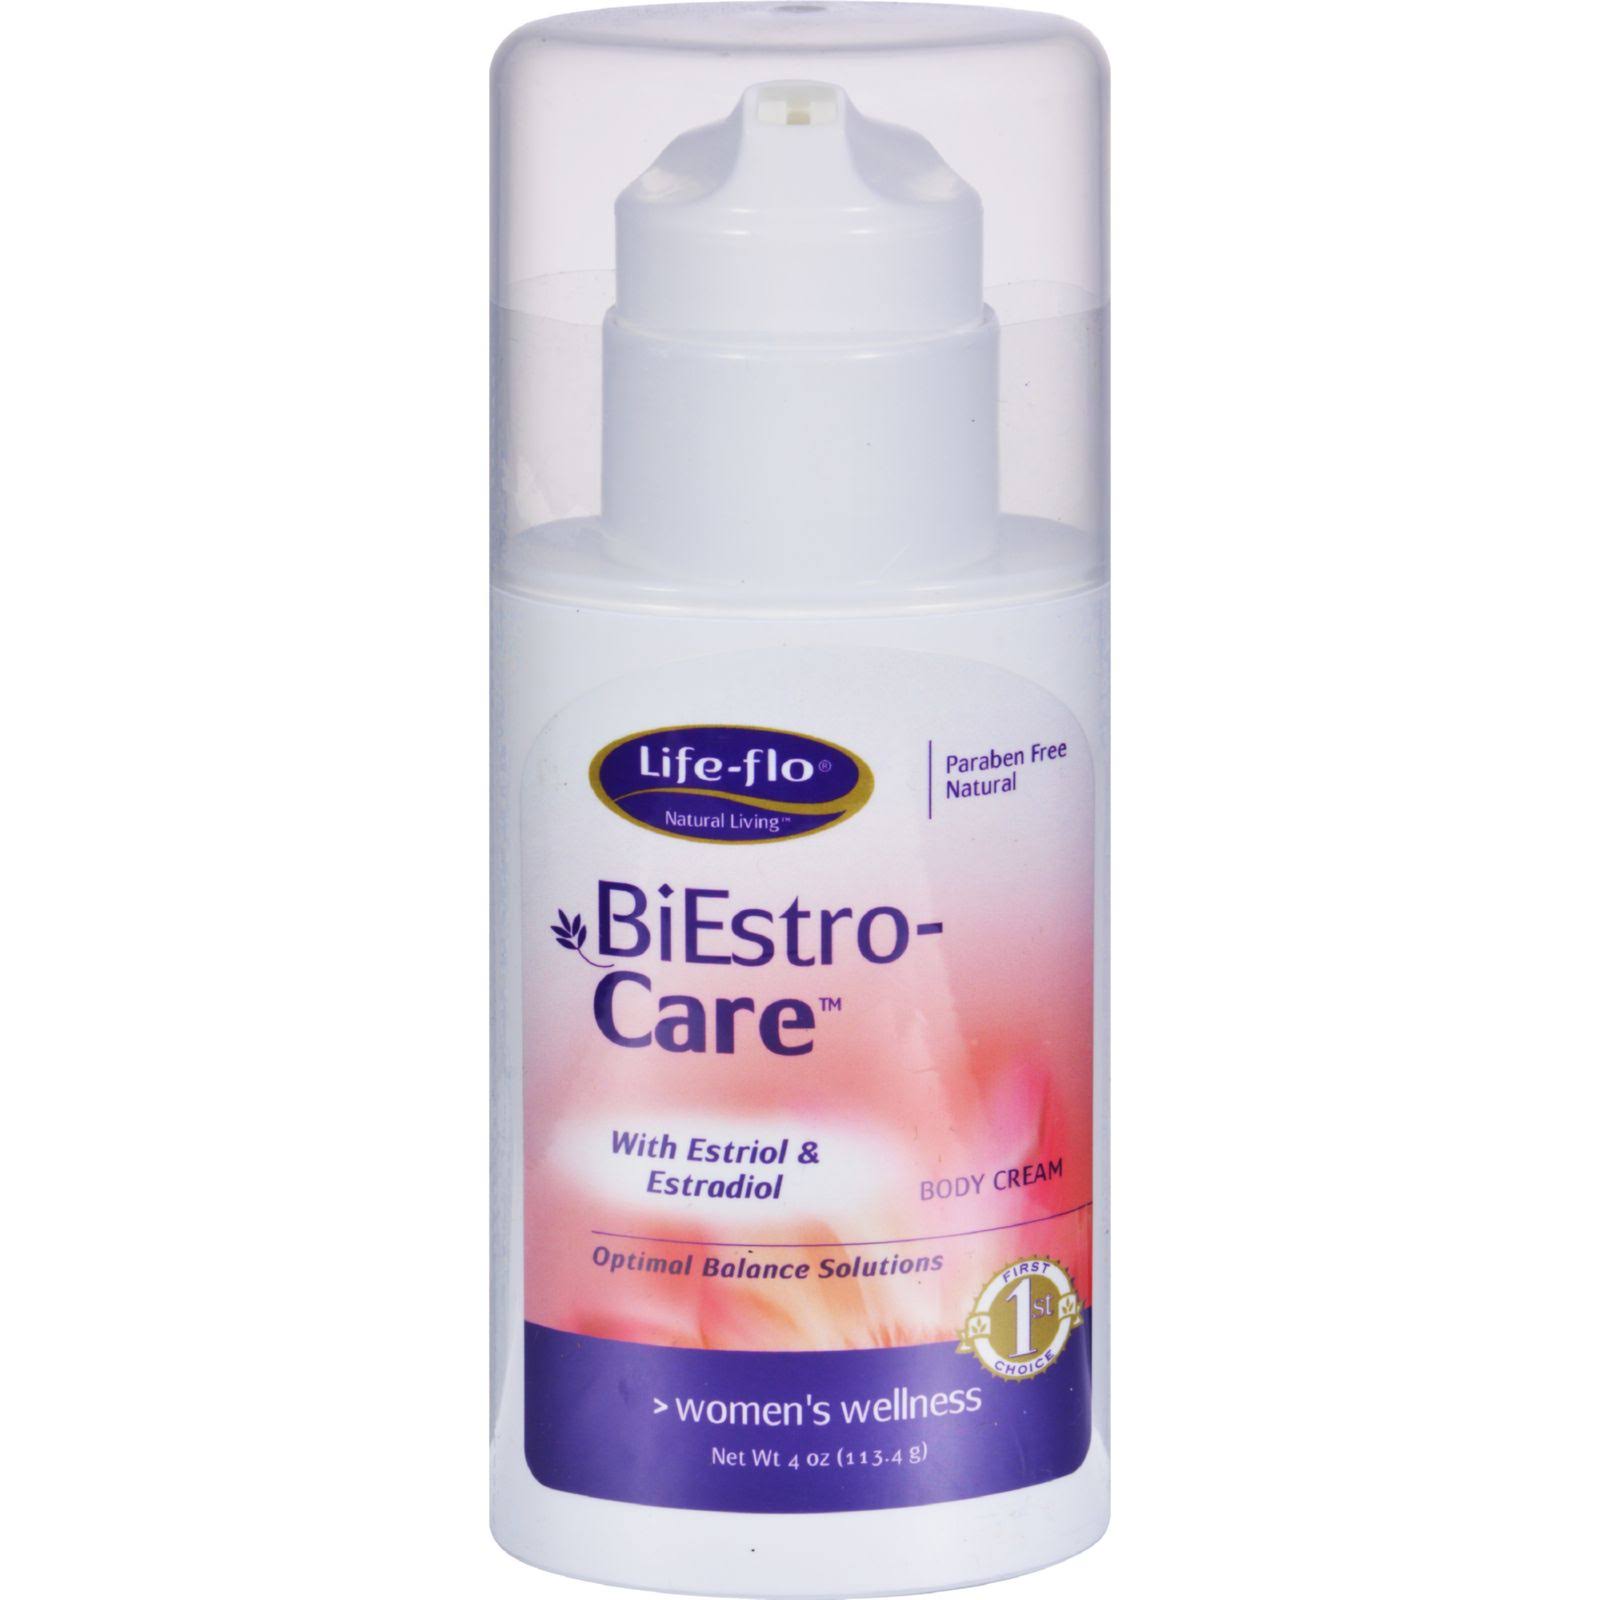 Life-Flo BiEstro-Care Body Cream